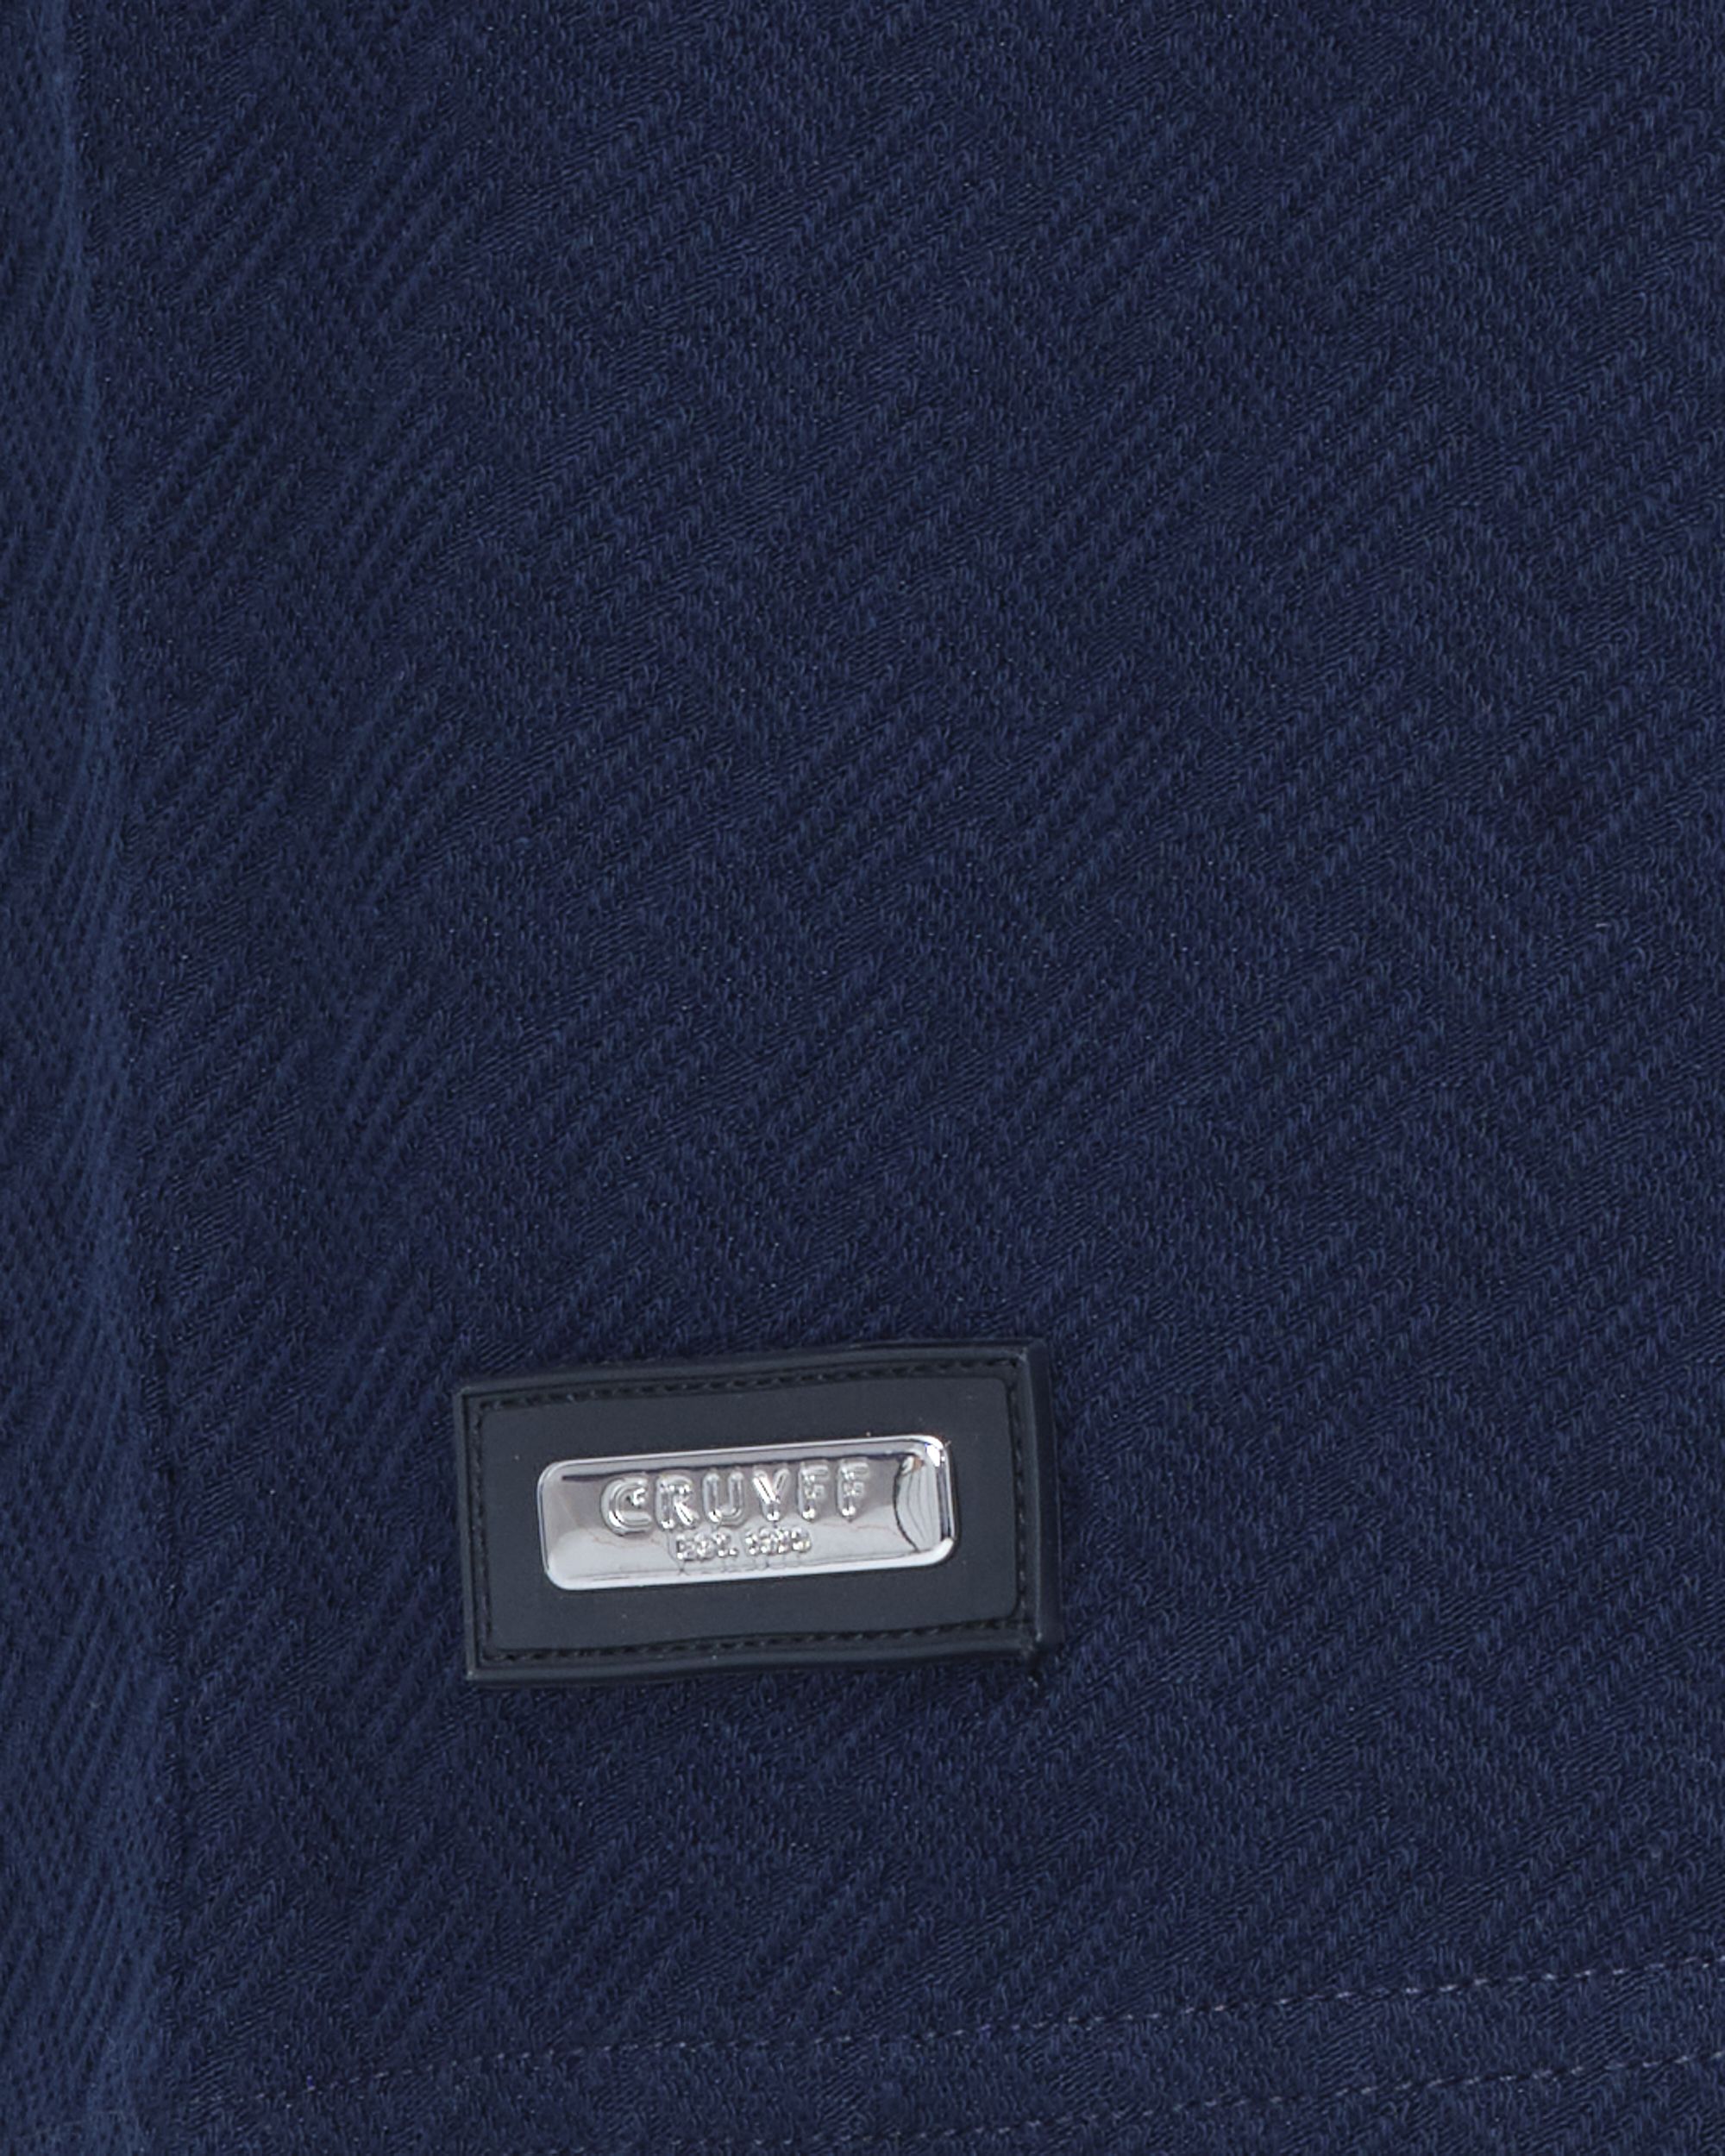 Cruyff Casco T-shirt KM Donker blauw 078801-001-L